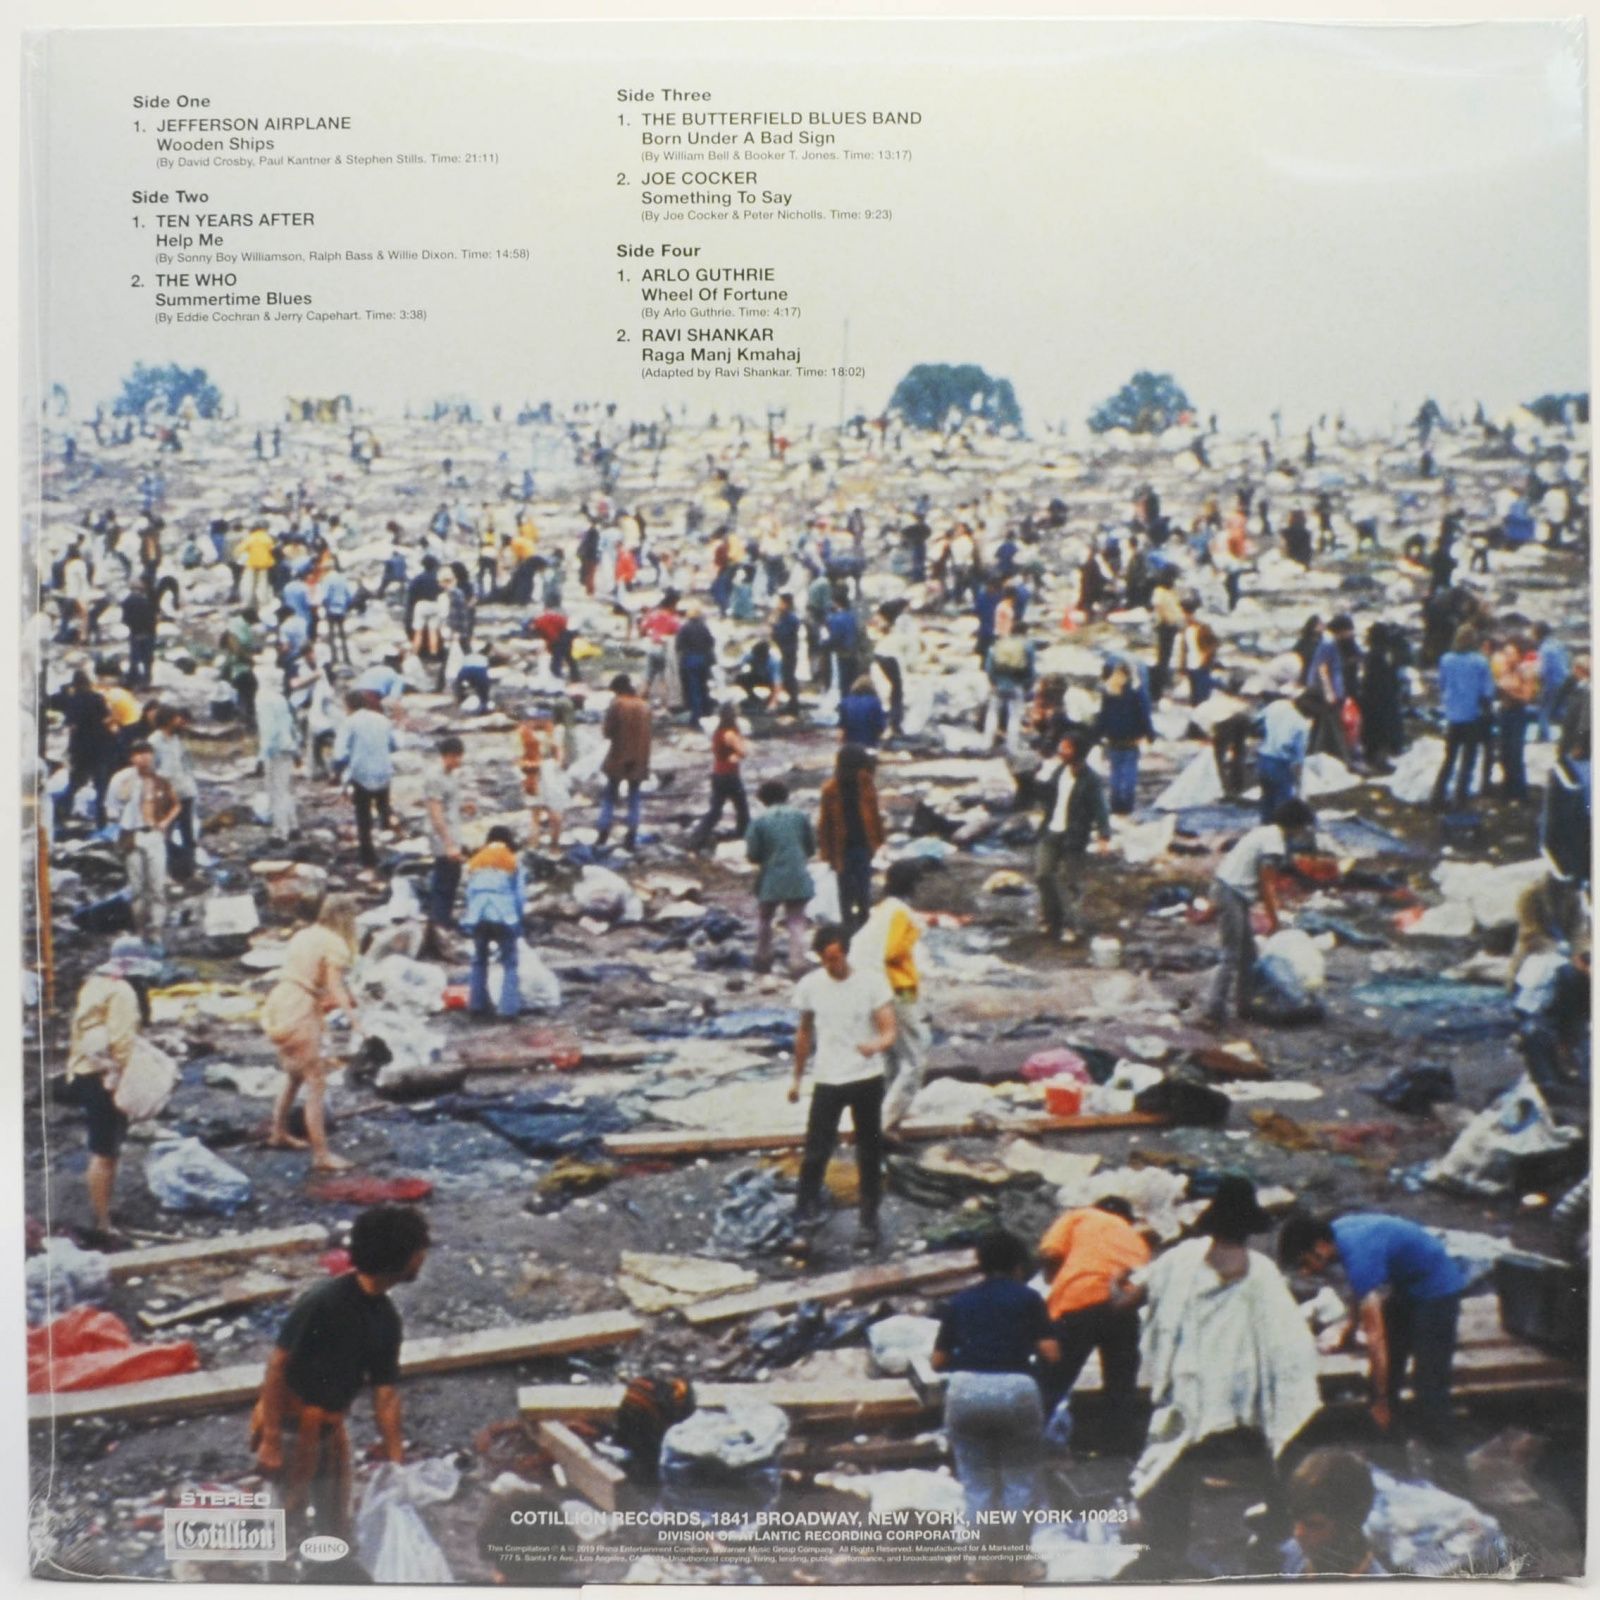 Various — Woodstock Four (2LP), 2019